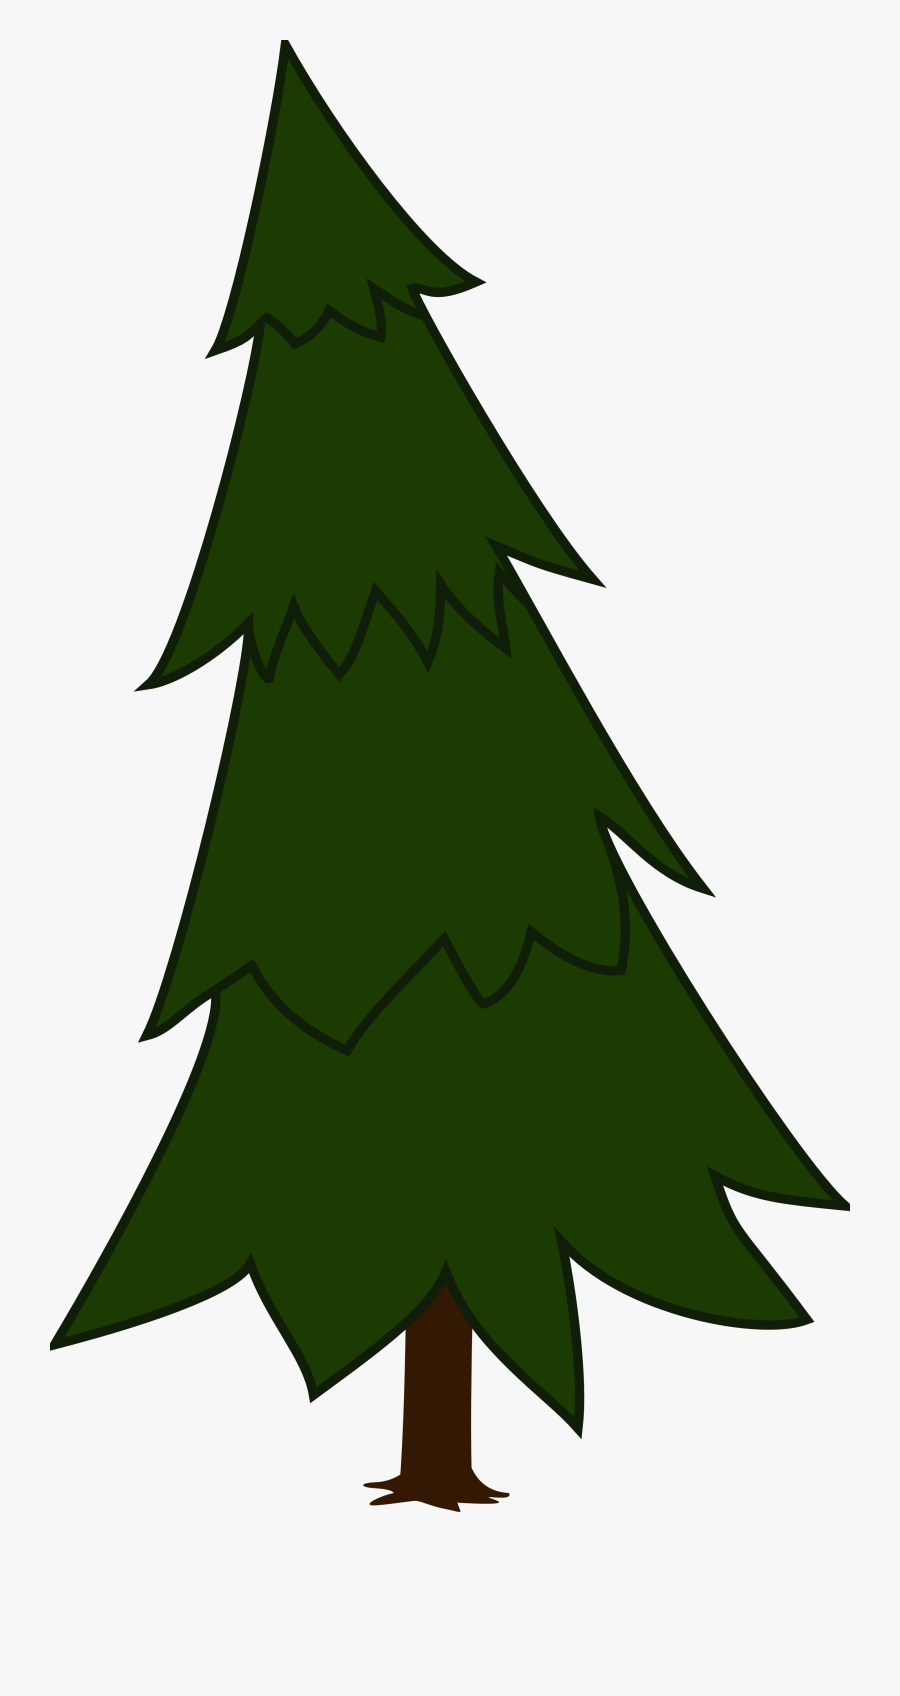 Pine Tree Svg Clipart - Tree Clipart Pine, Transparent Clipart